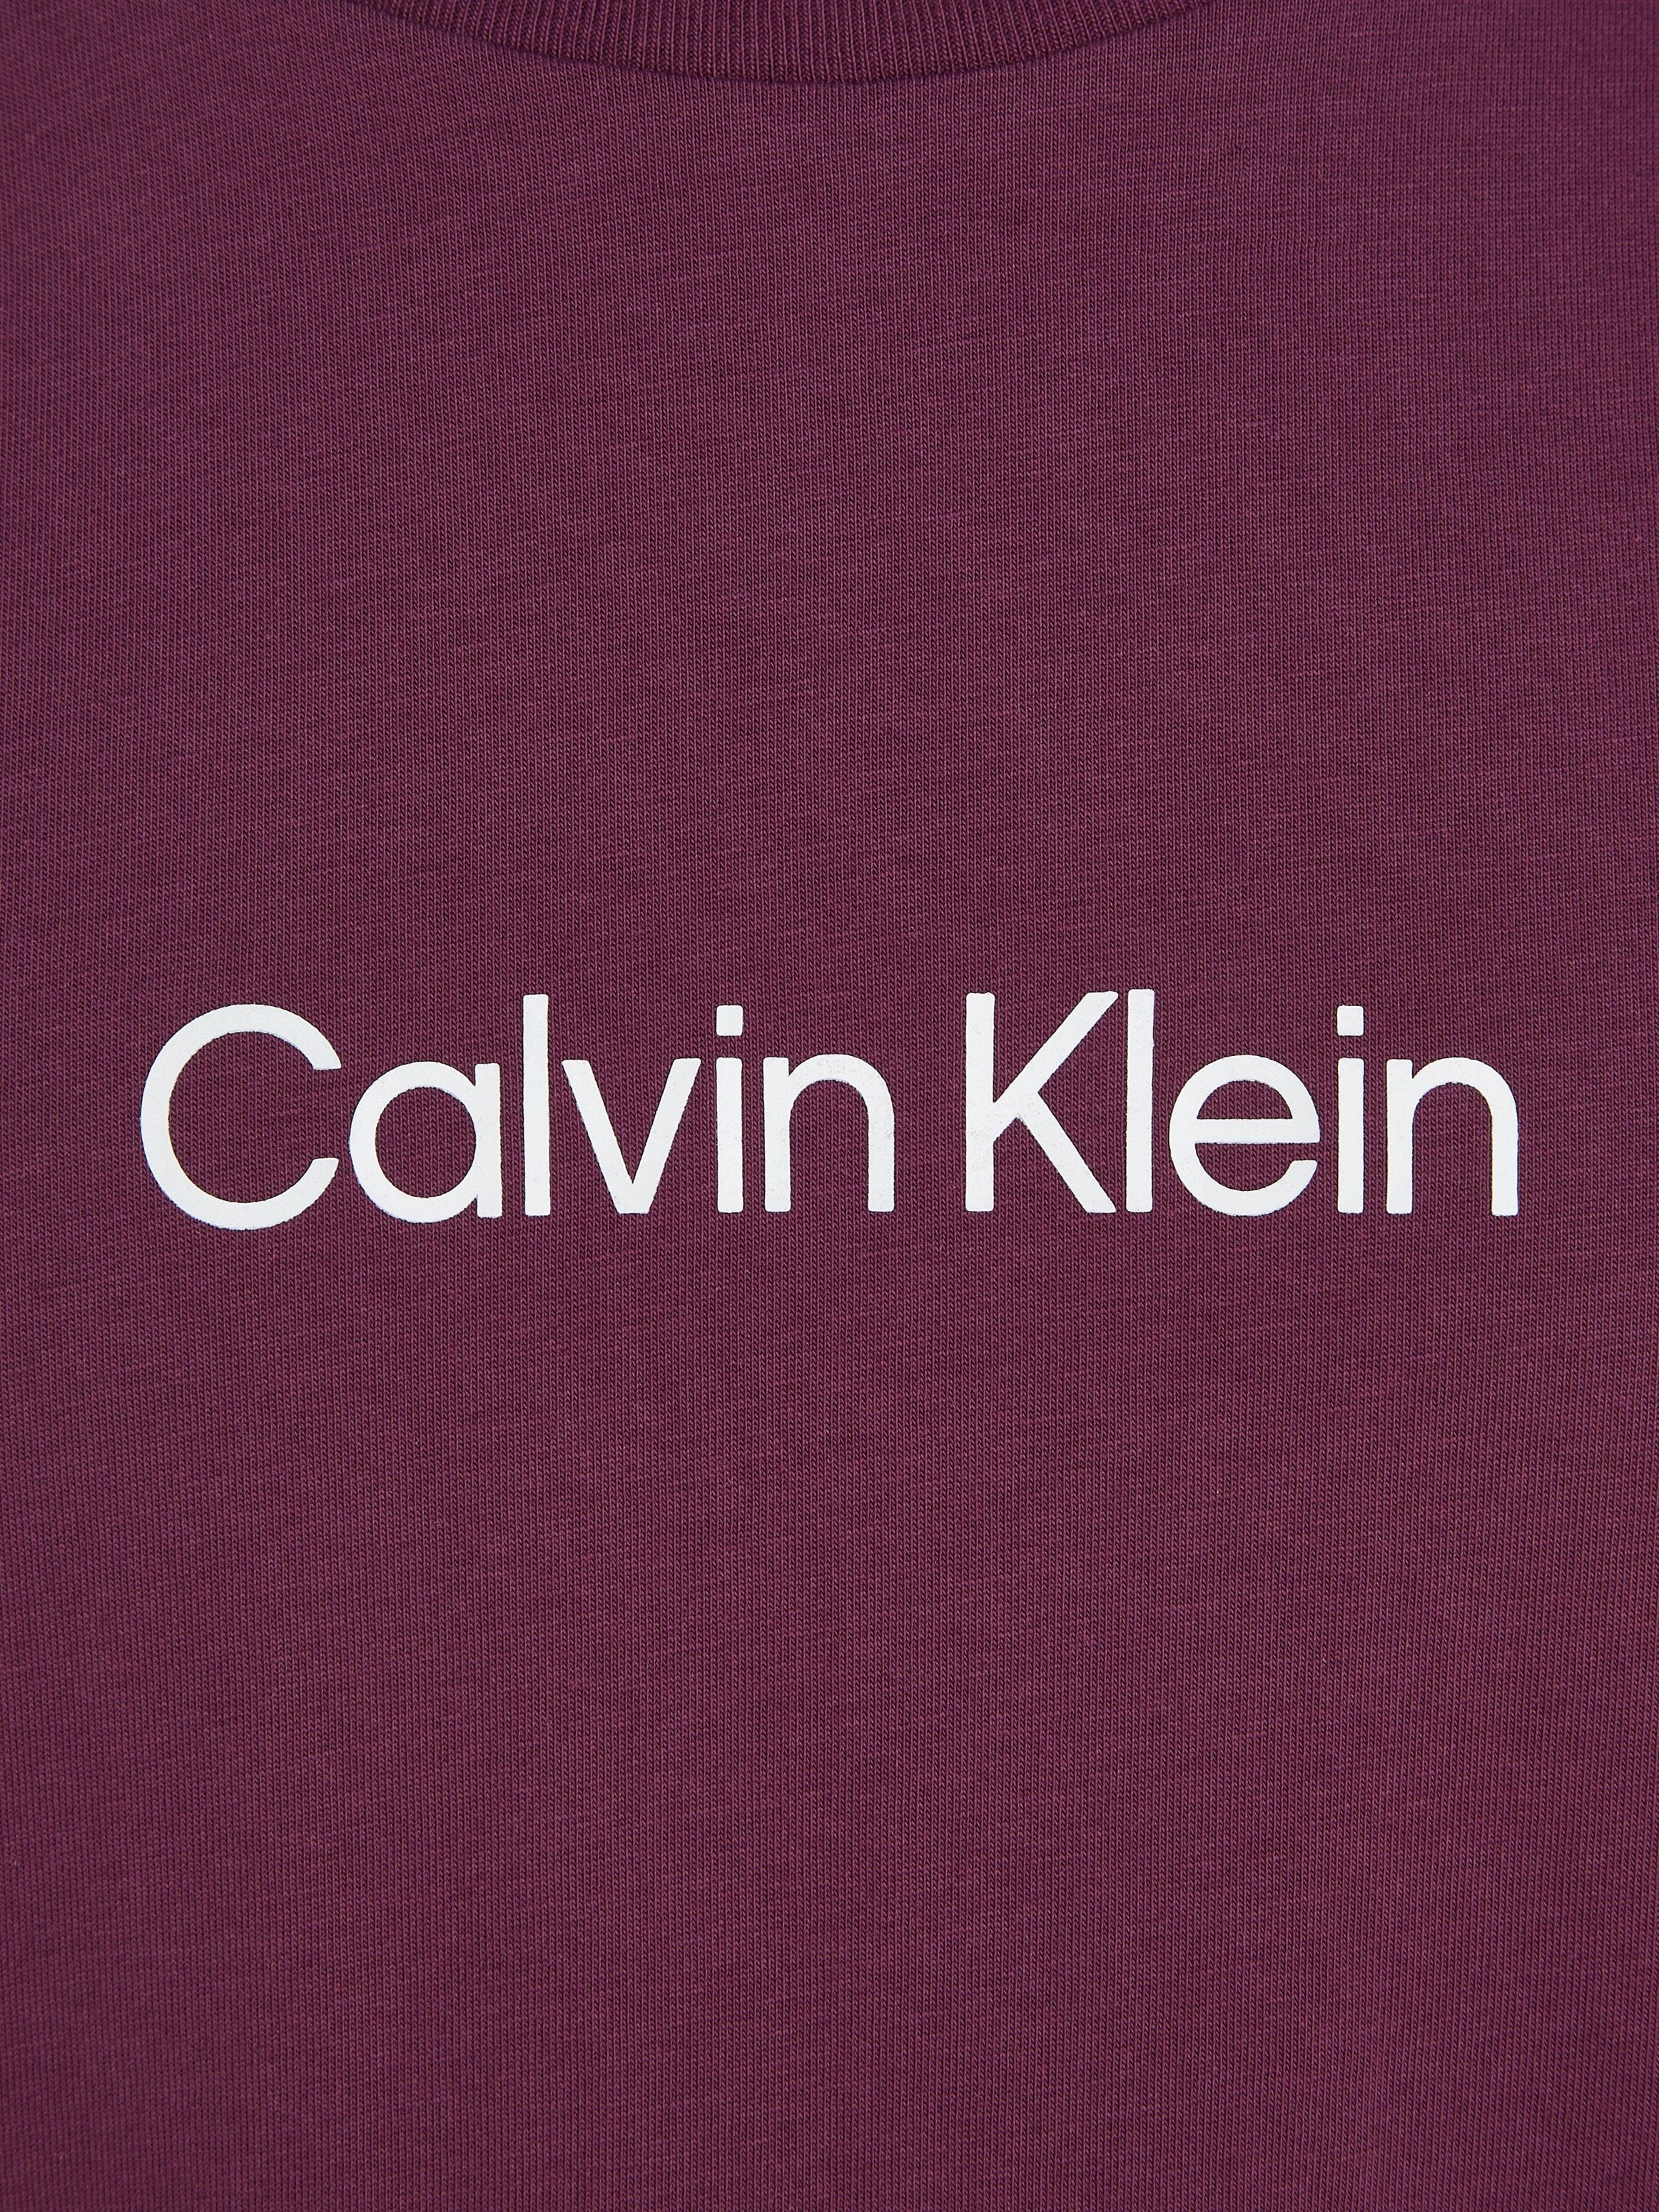 Calvin Klein T-Shirt HERO mit aufgedrucktem T-SHIRT COMFORT LOGO Markenlabel Italian Plum